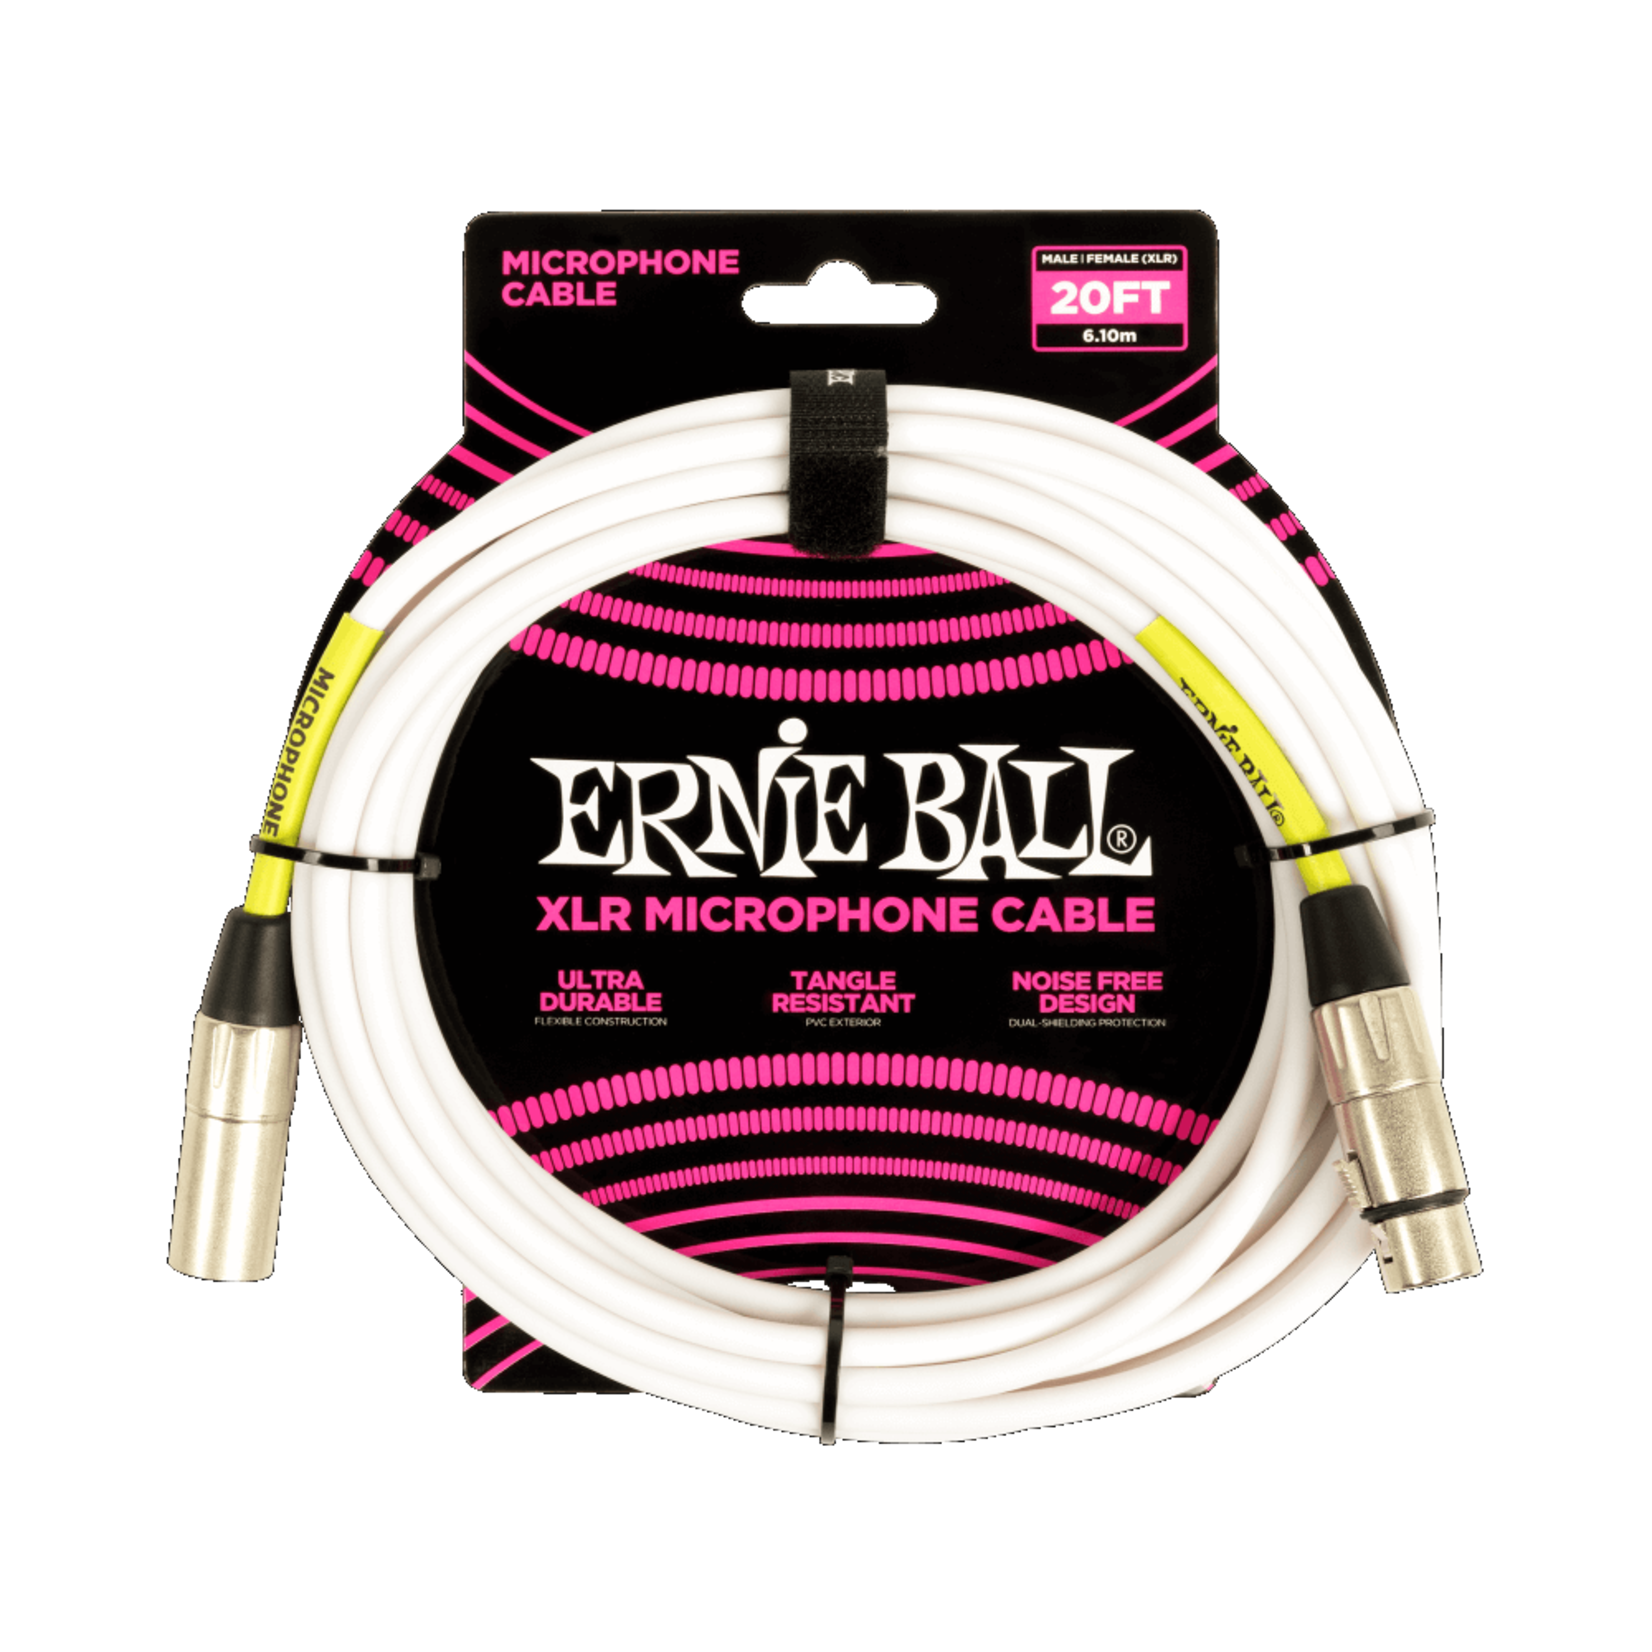 Ernie Ball Classic XLR Microphone Cable Male/Female 20ft - White